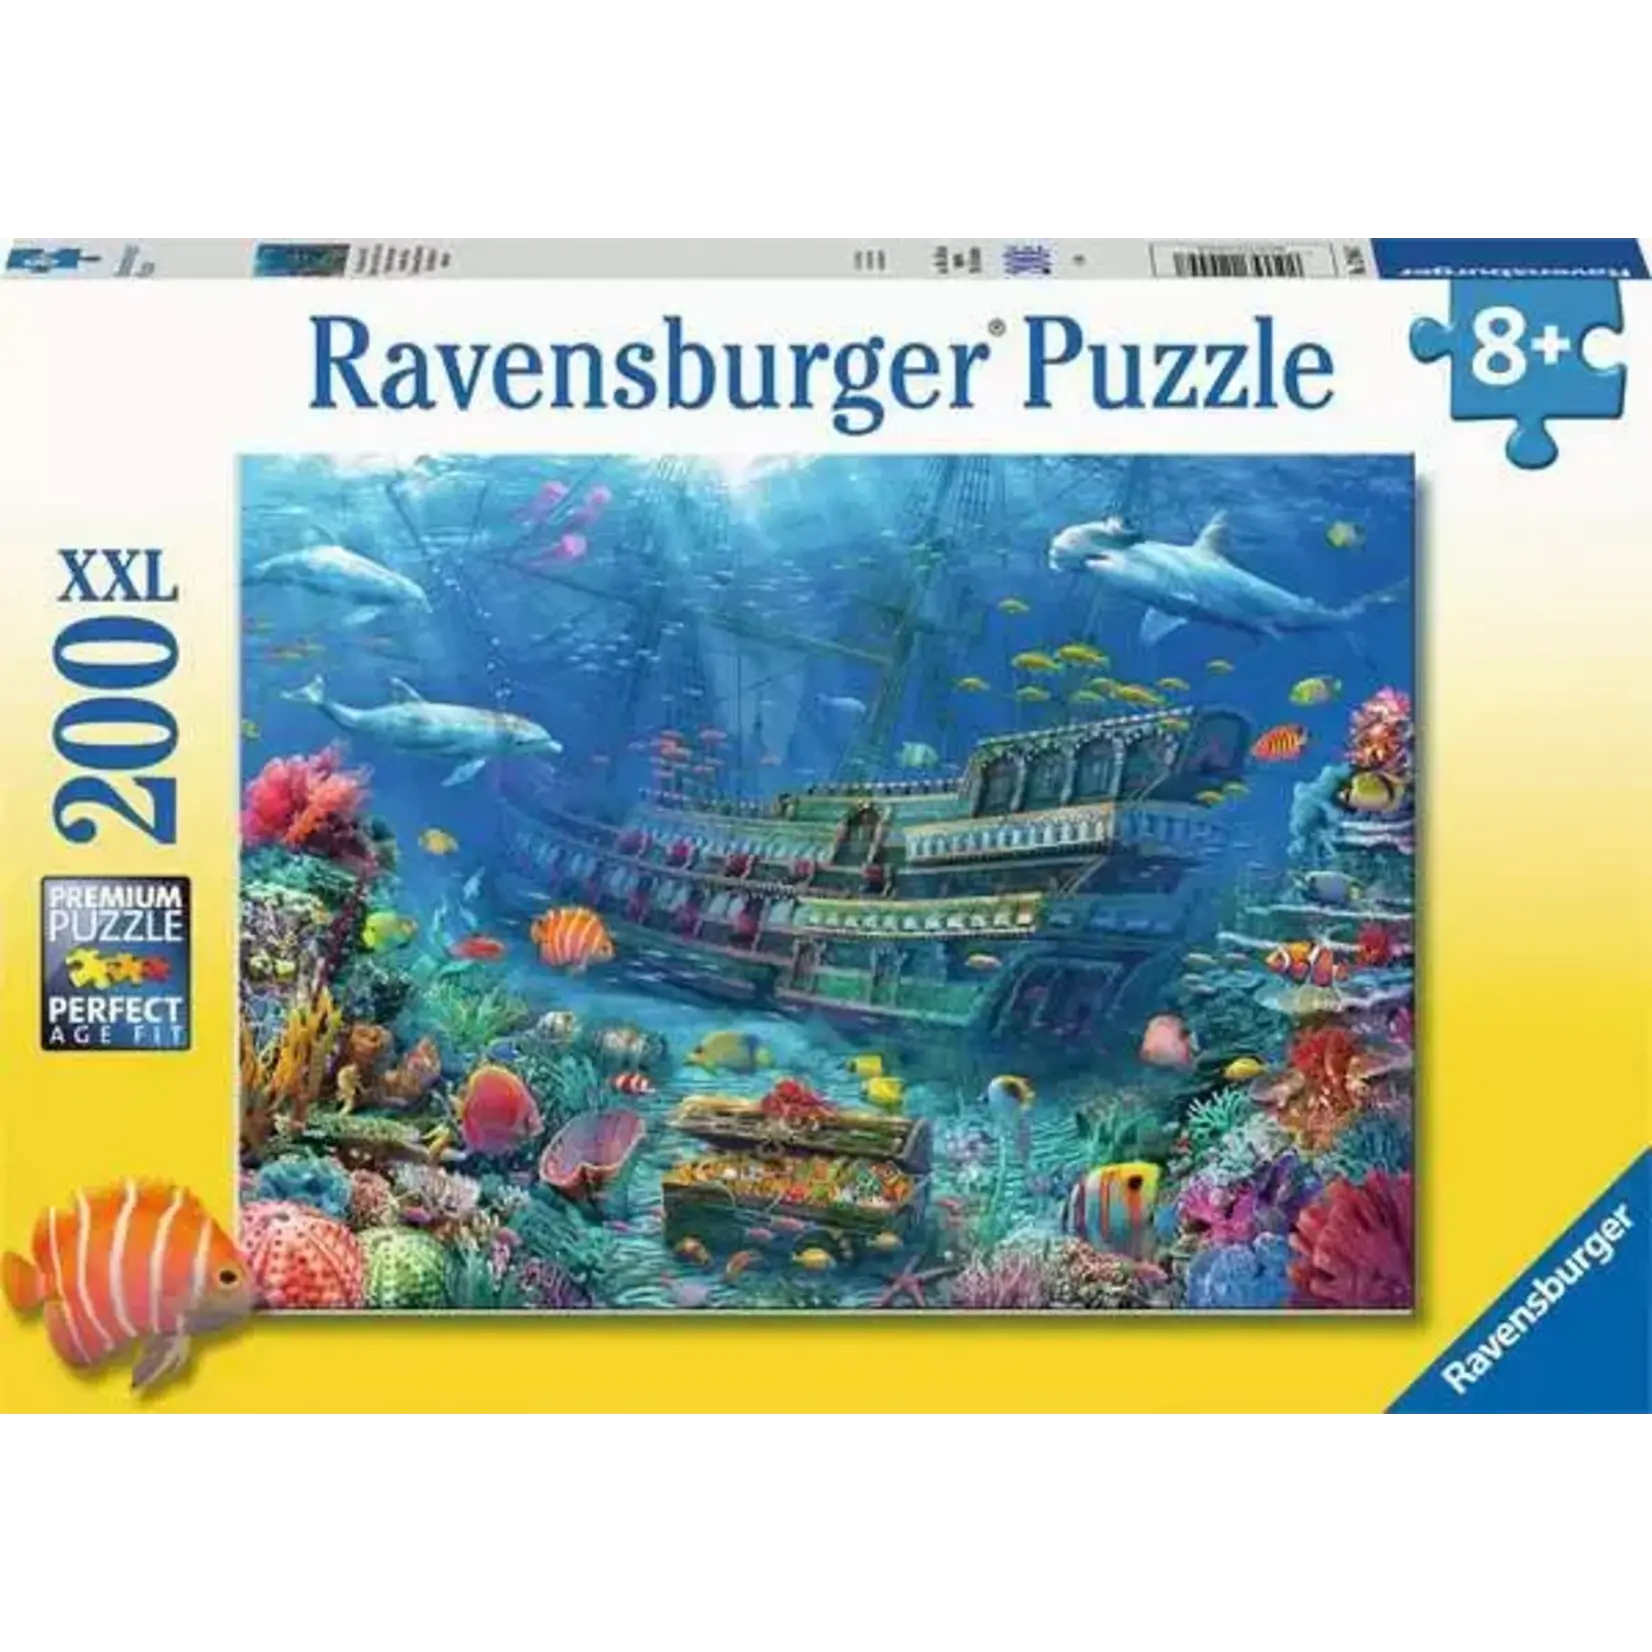 Ravensburger Sunken Ship Puzzle 200pcs XXL